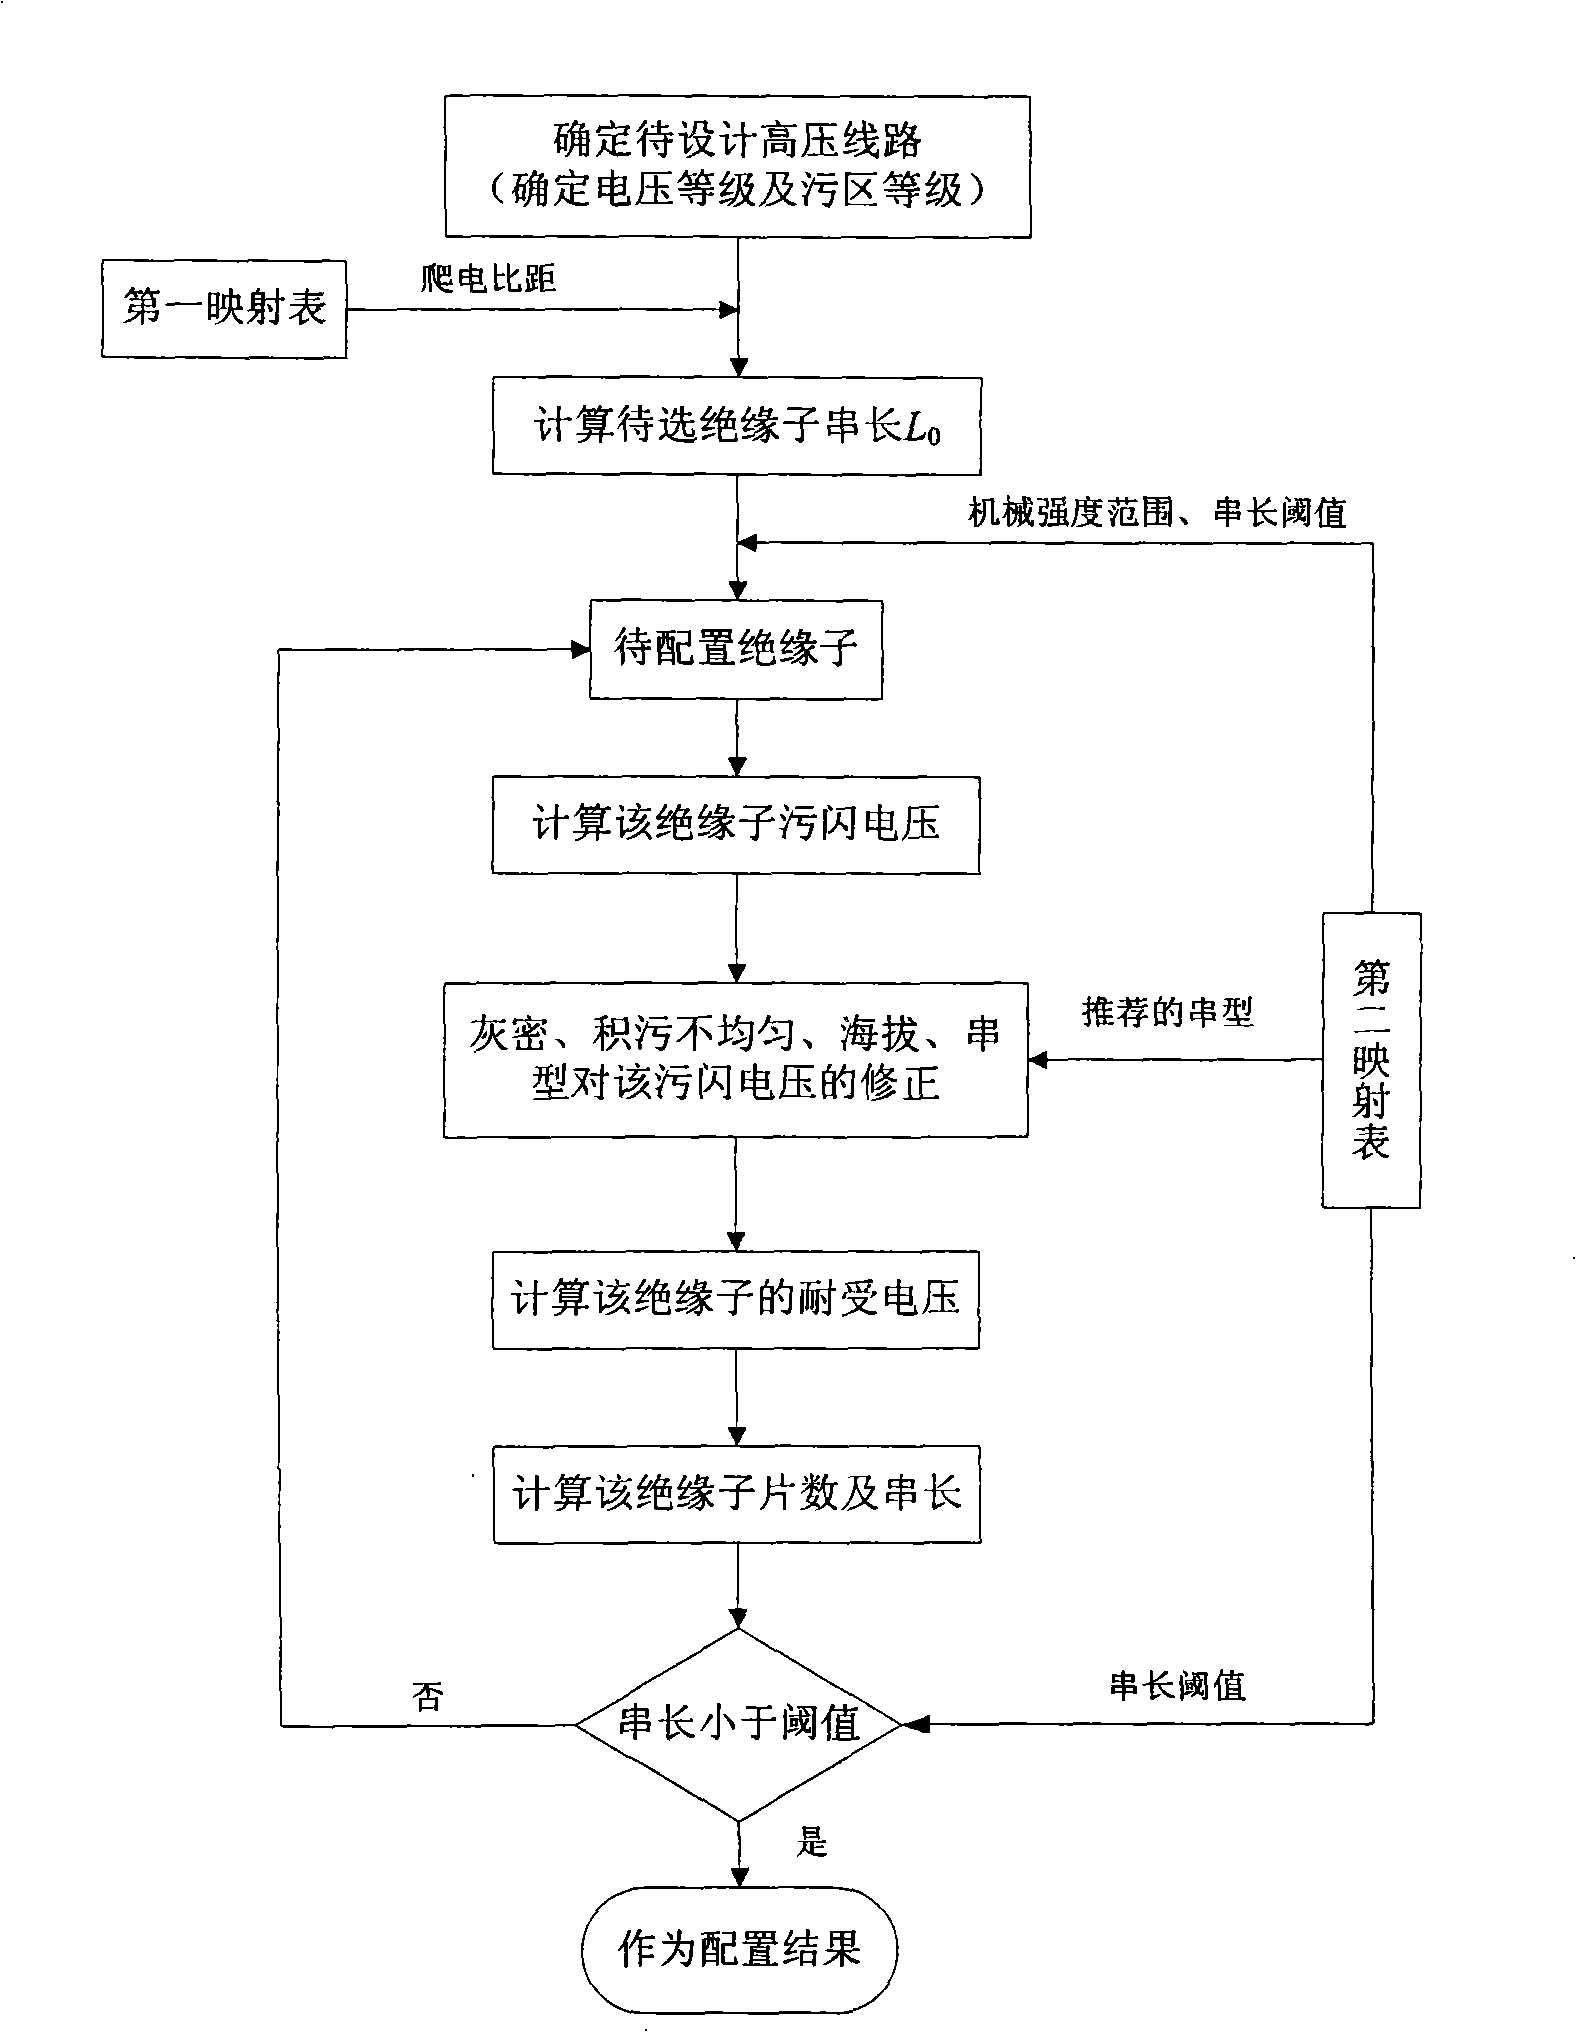 Configuration method of high-voltage transmission line insulator